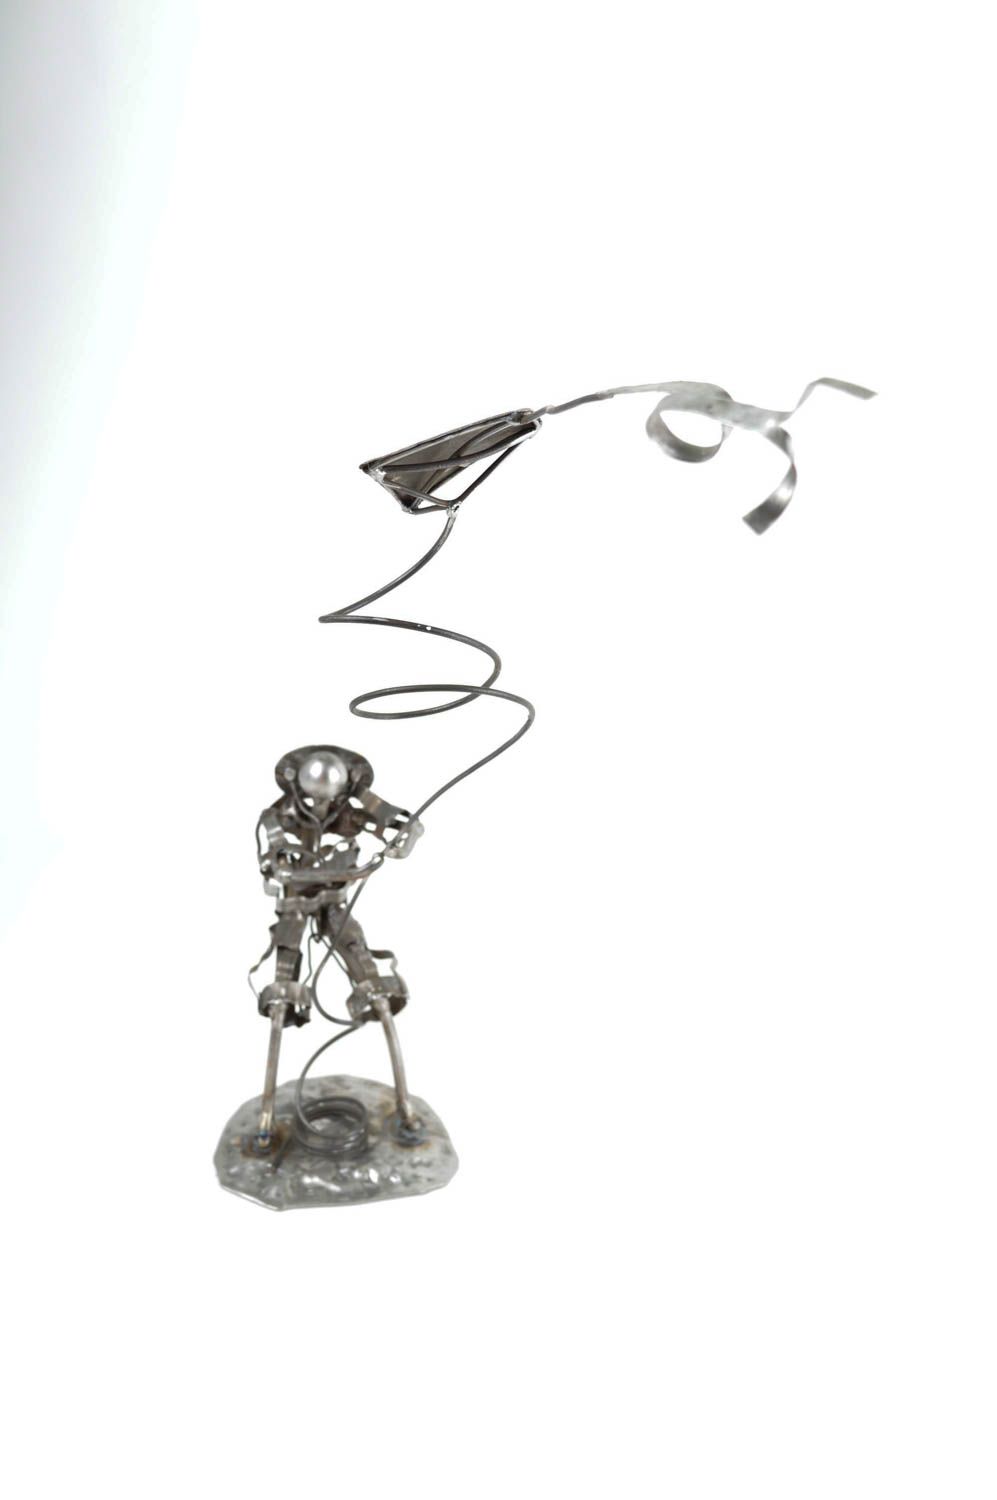 Unusual handmade metal figurine metal craft gift ideas decorative use only photo 3